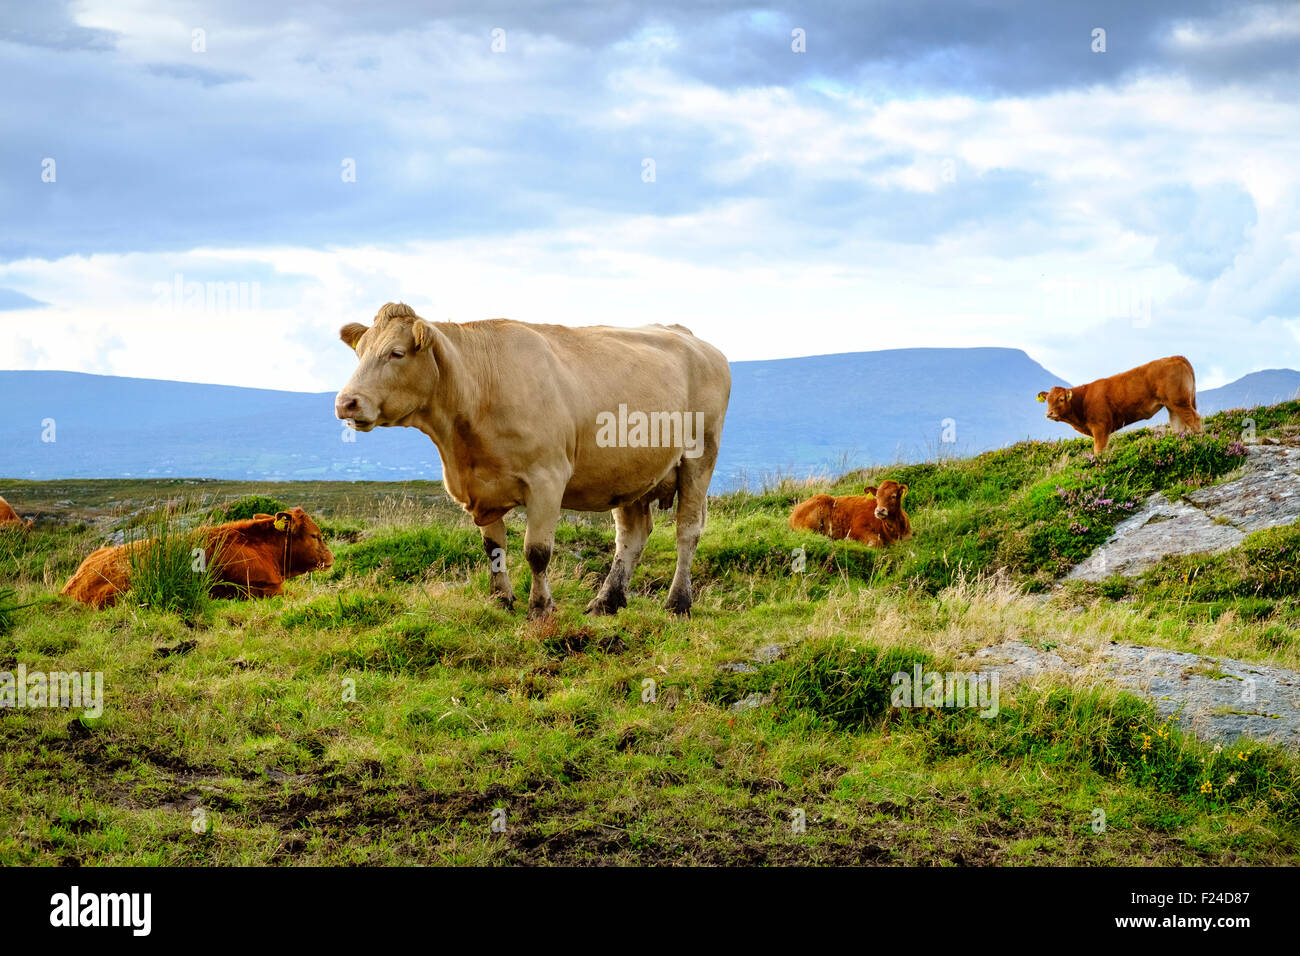 cattle in irish landscape Stock Photo